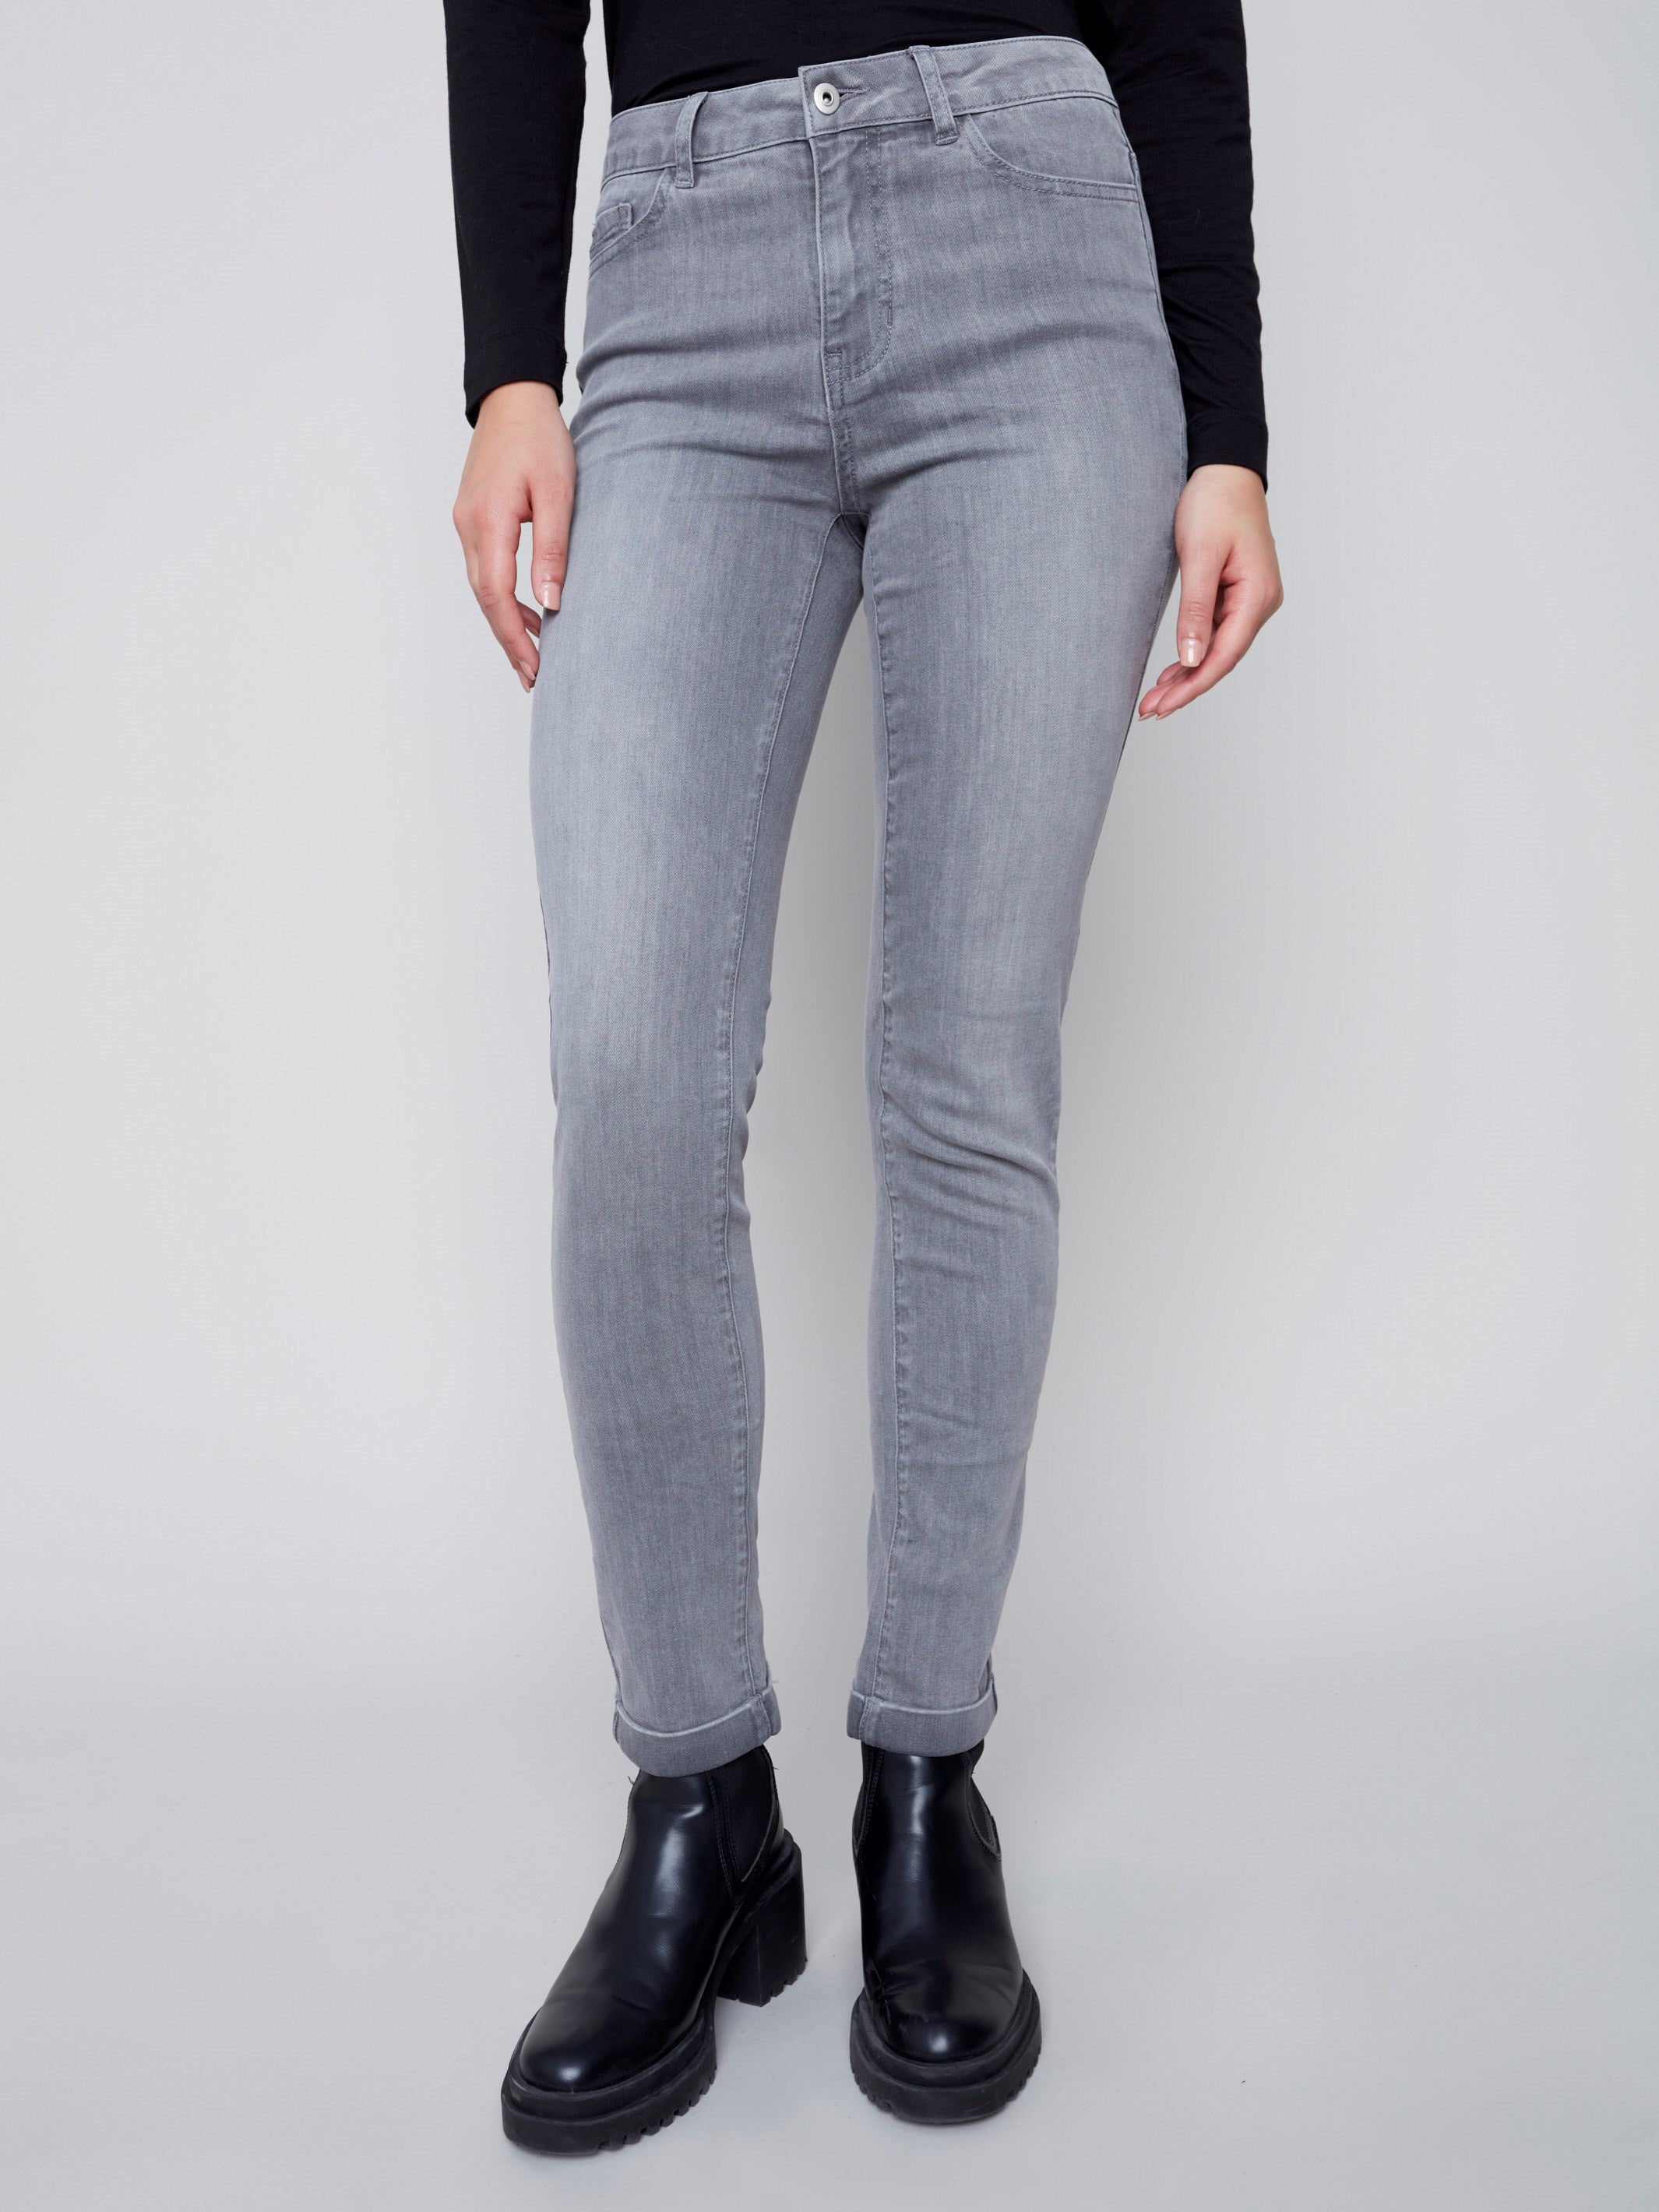 Cuffed Hem Jeans - Soft Gray